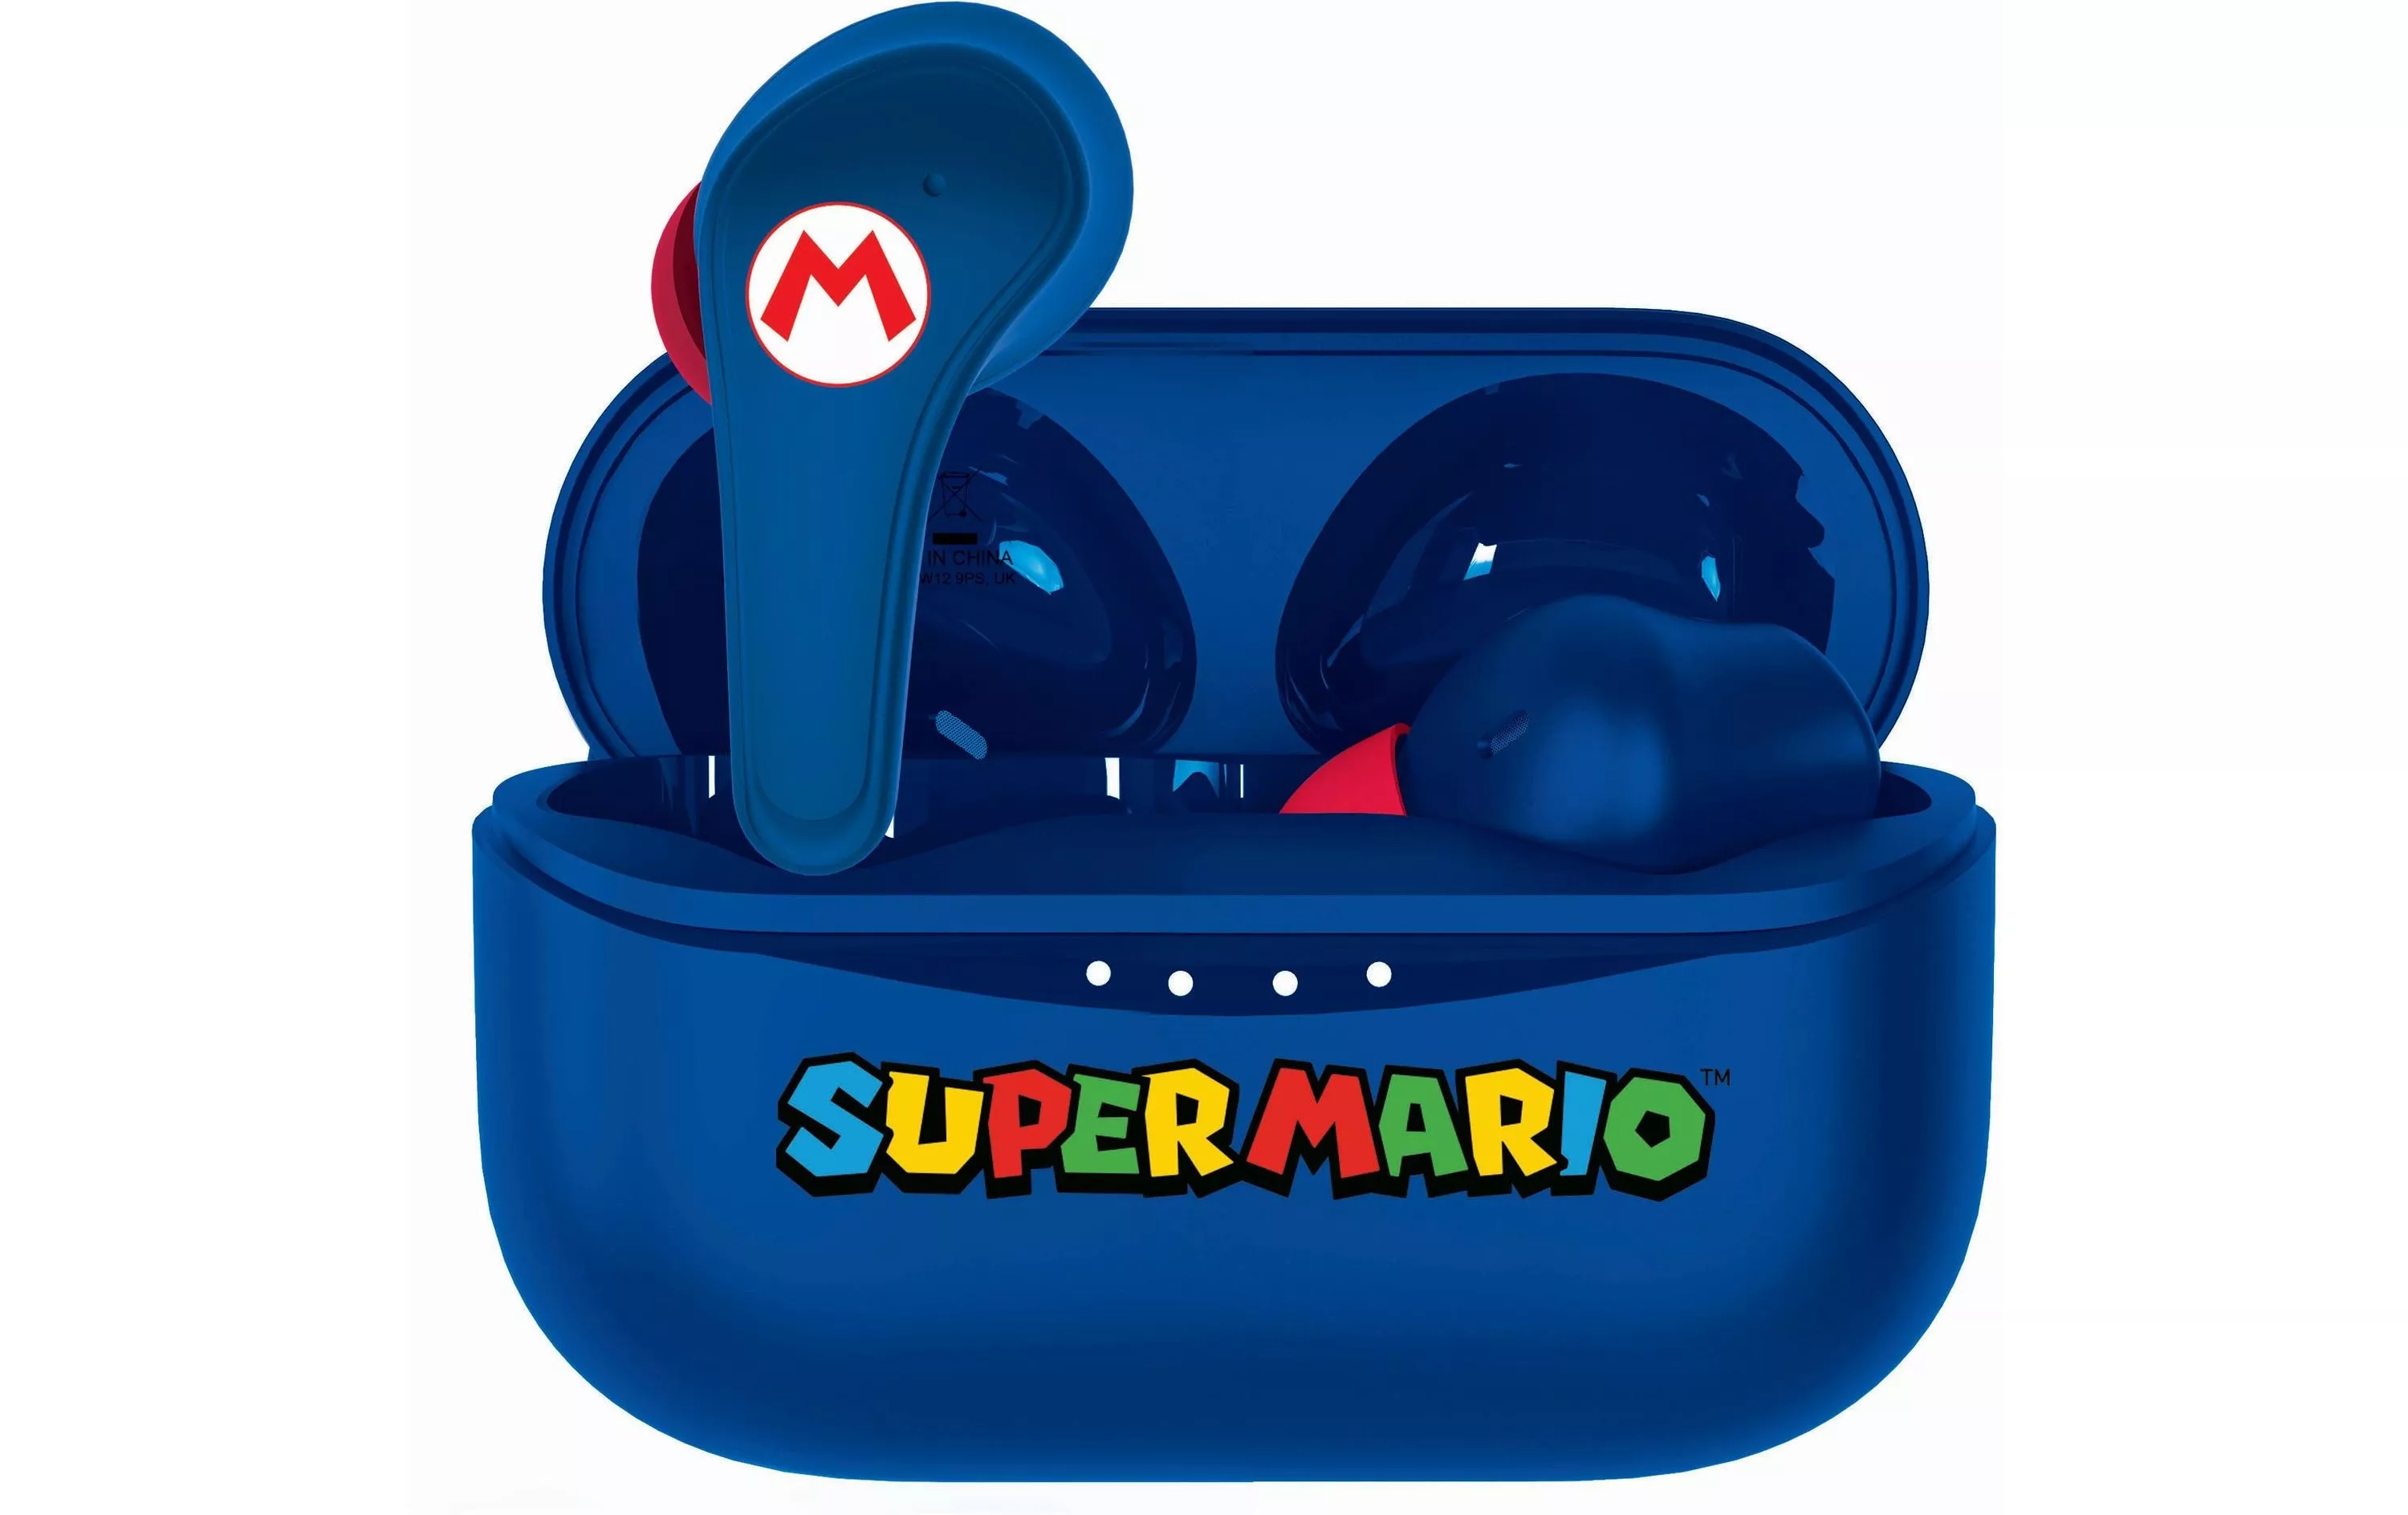 True Wireless In-Ear-Kopfhörer Nintendo Super Mario Blau